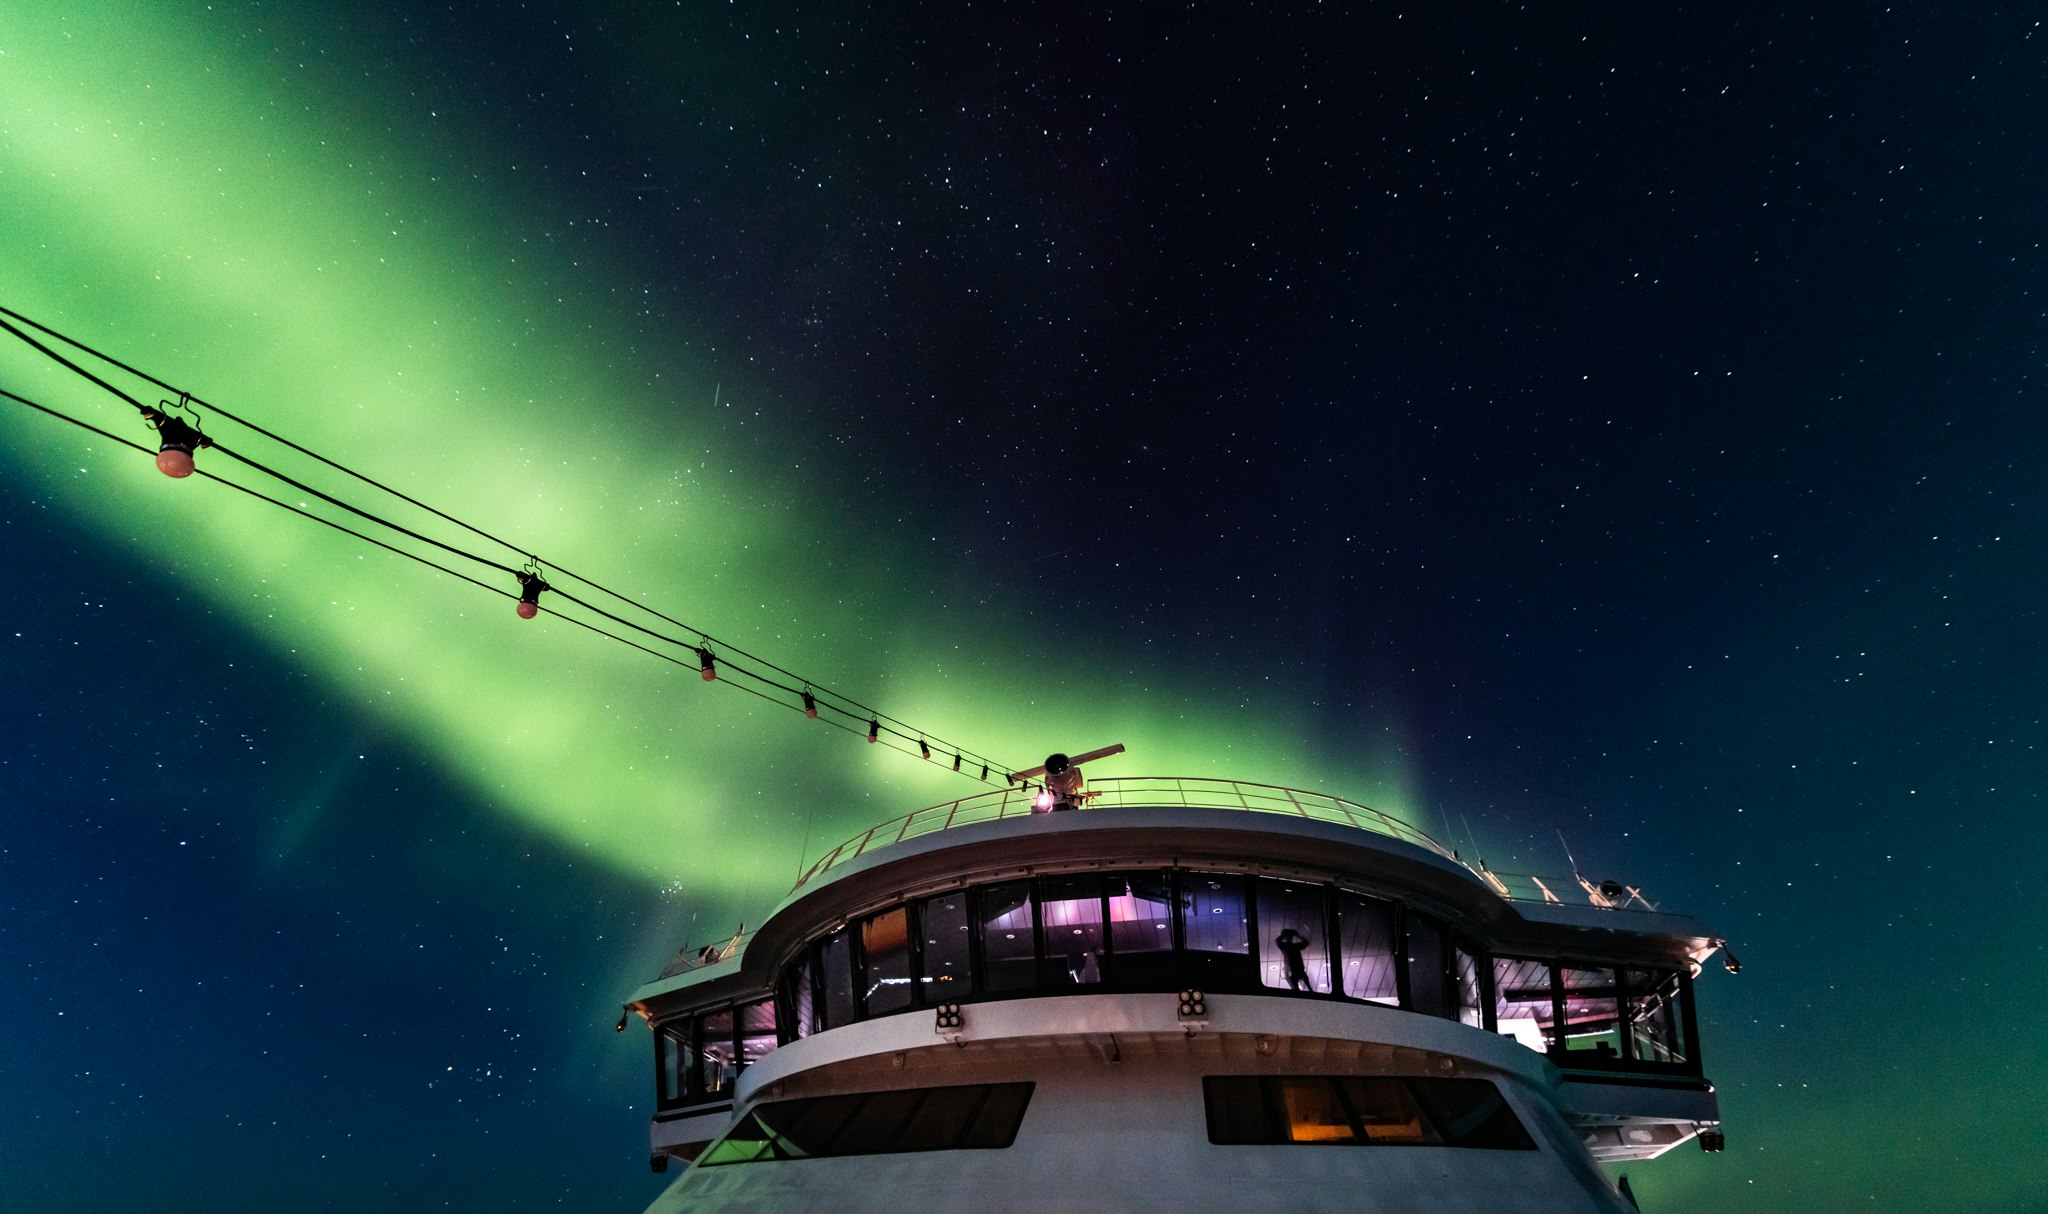 The observation deck on the Roald Amundsen ship on the sea